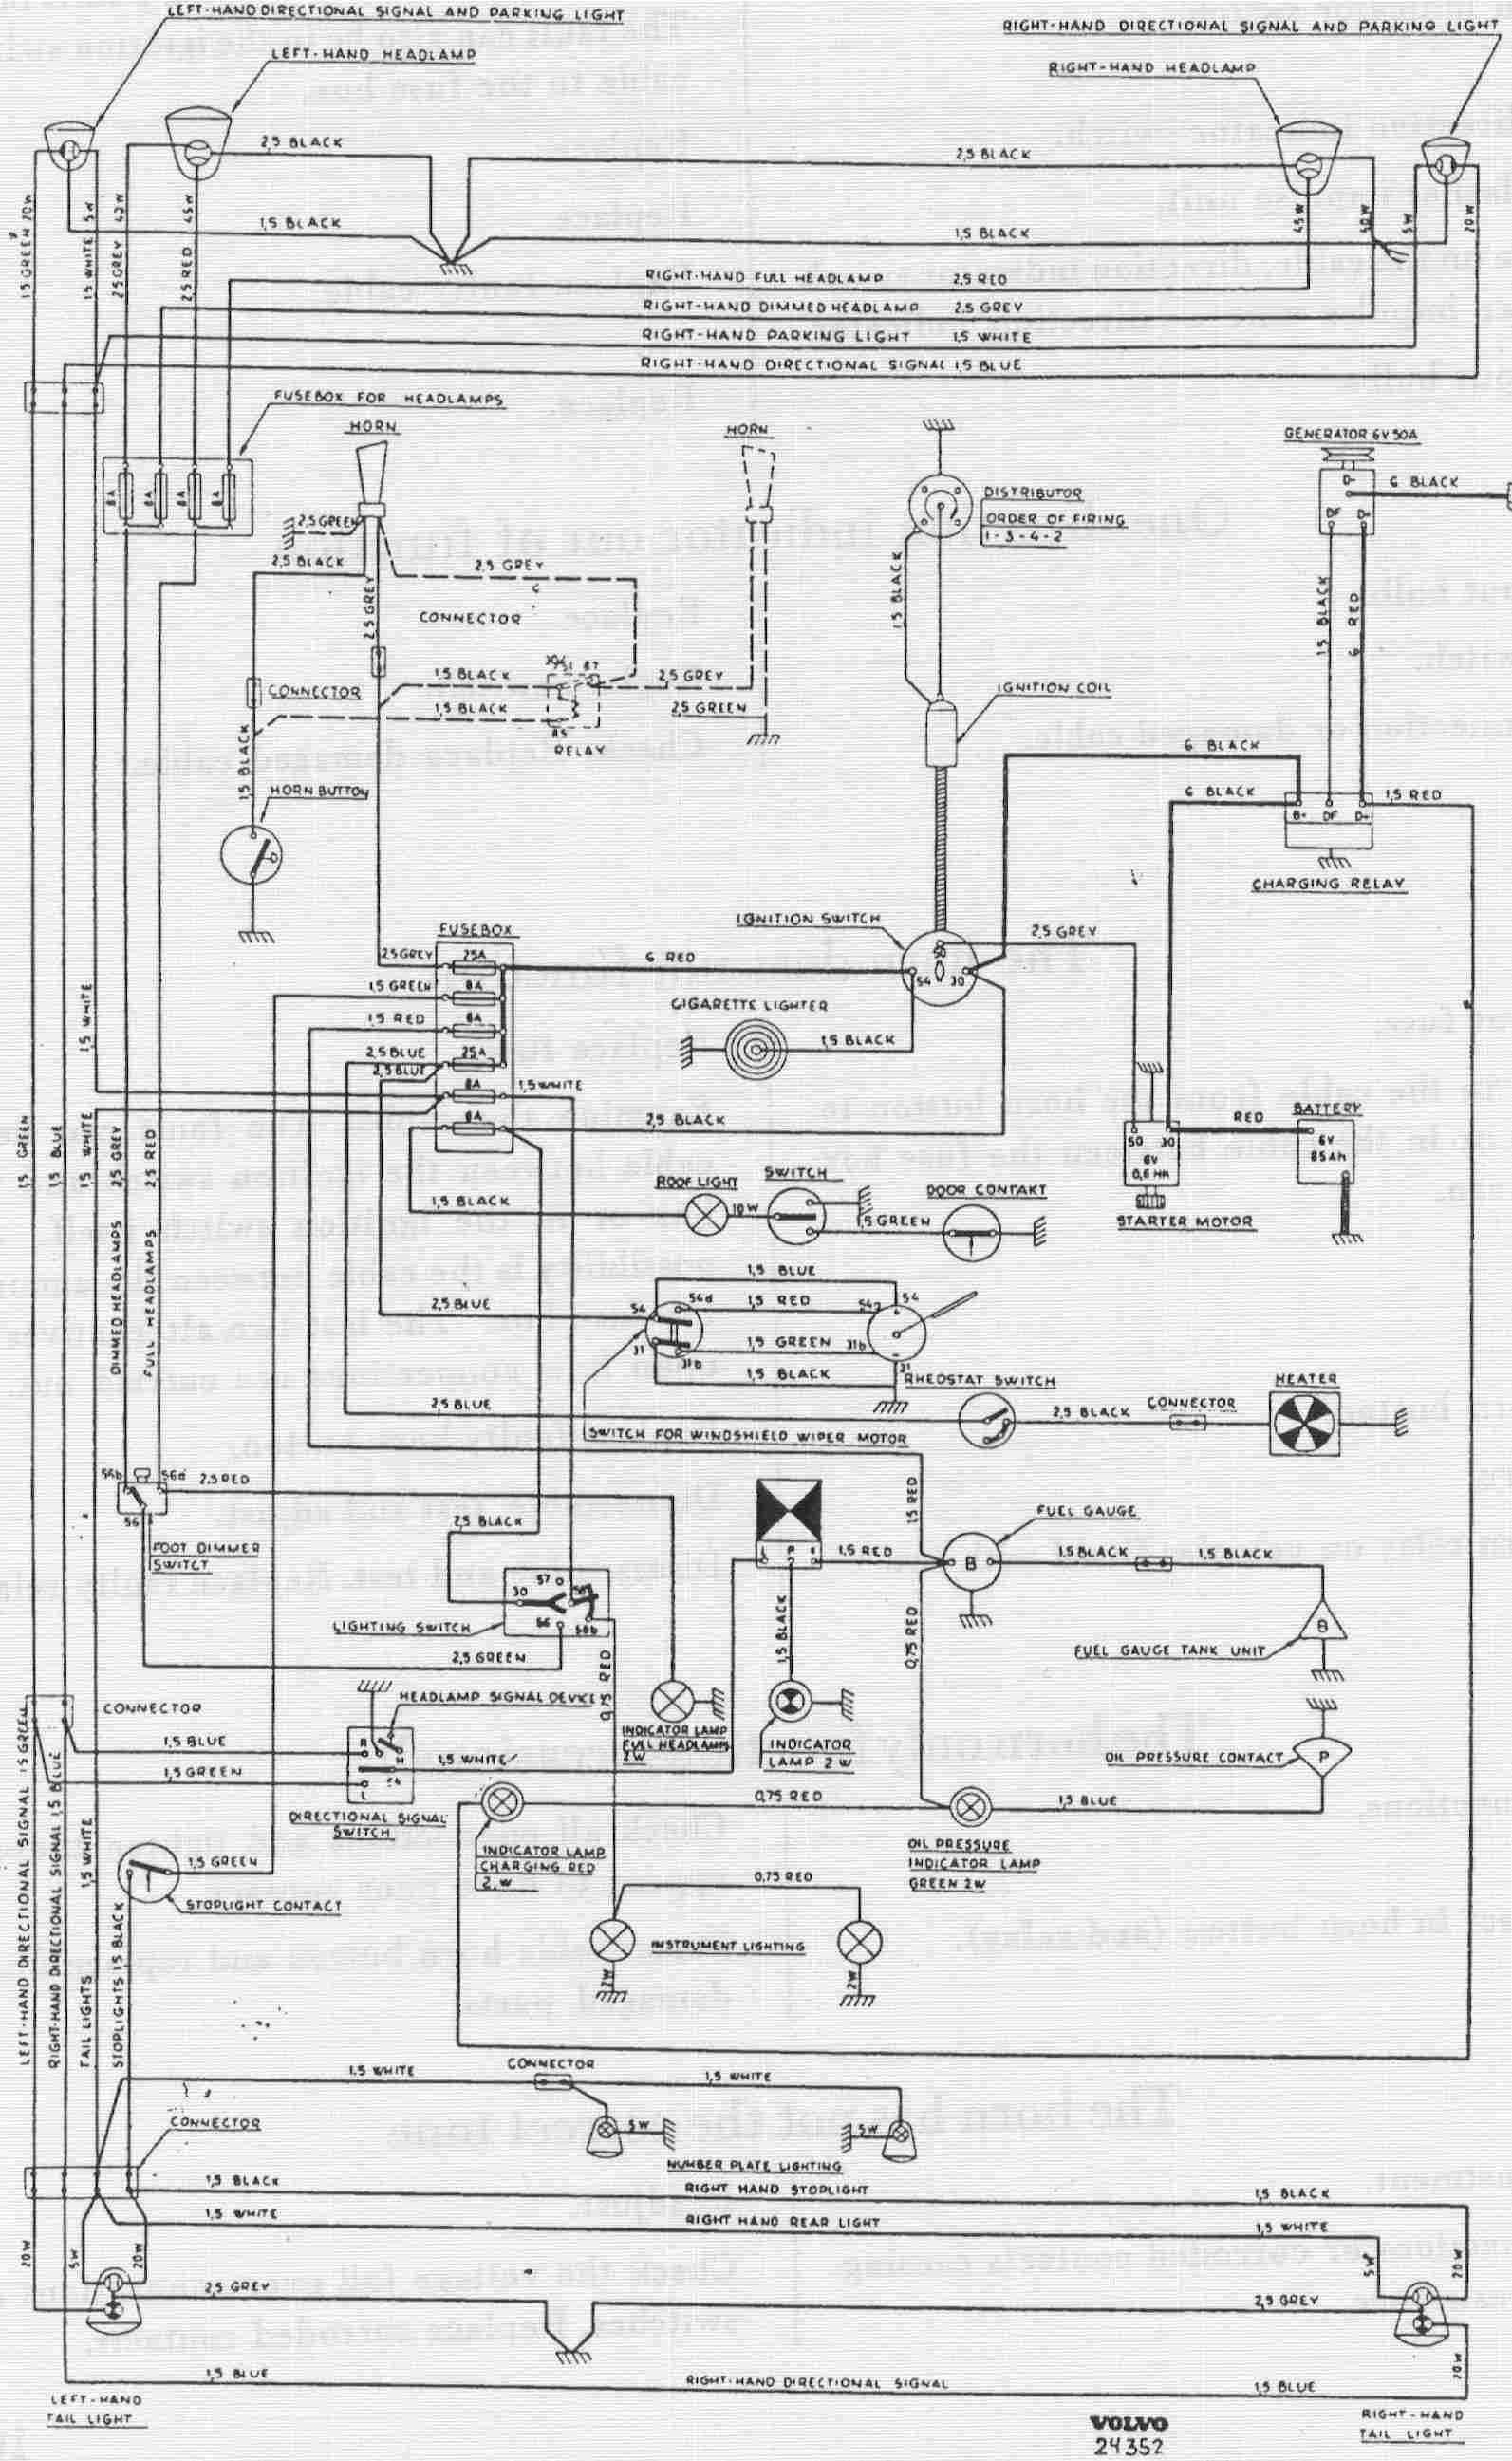 complete-wiring-diagram-of-volvo-pv544.jpg